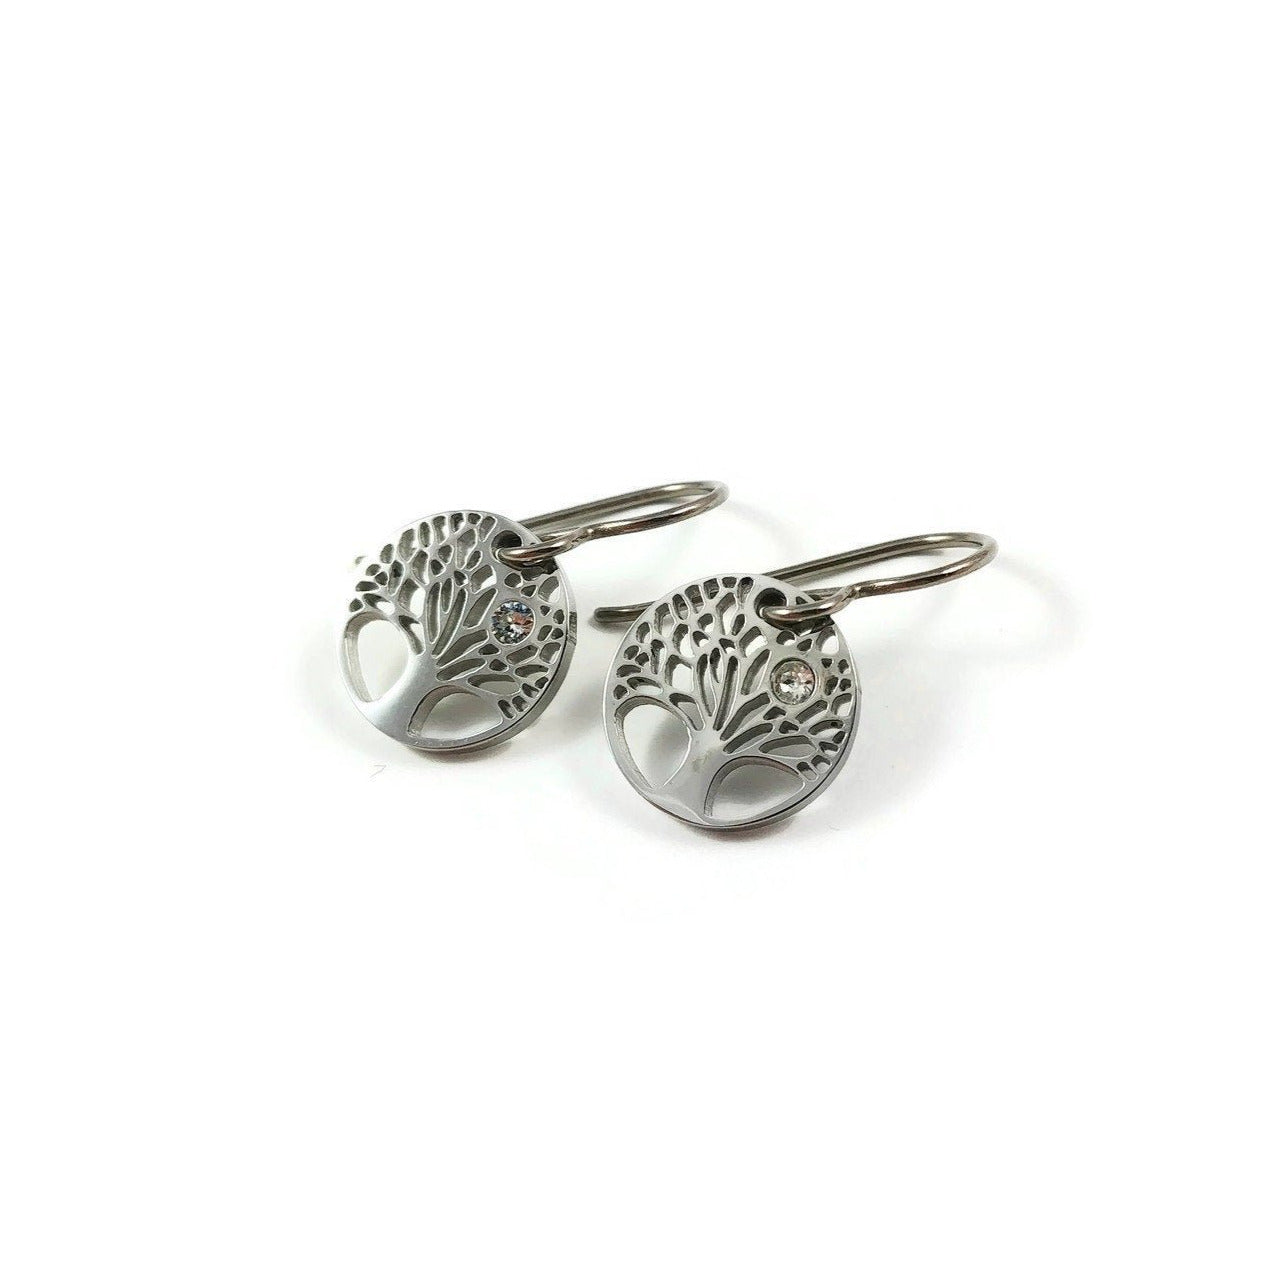 Mini tree zirconia dangle earrings - Hypoallergenic pure titanium and stainless steel